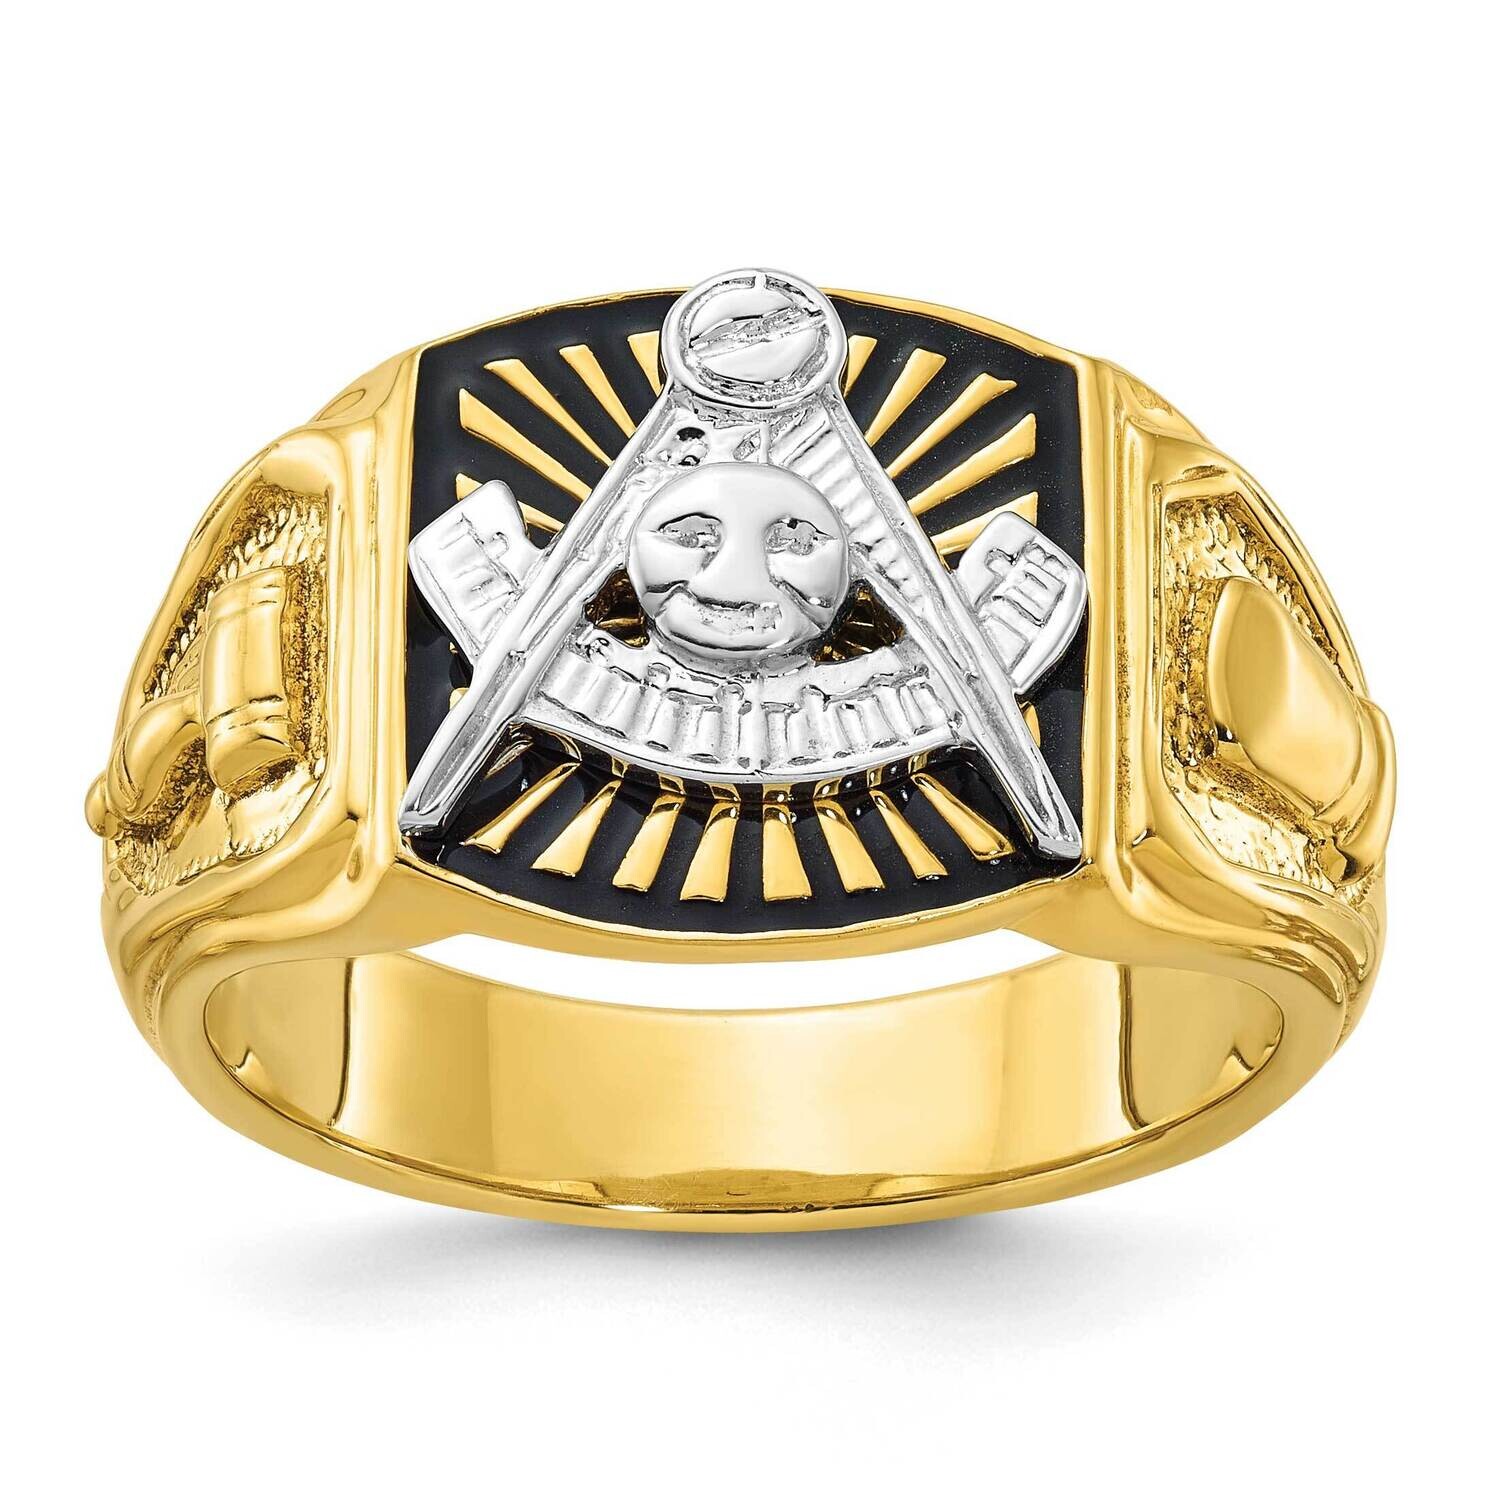 Ibgoodman Men's Polished Textured Black Enamel Past Master Masonic Ring 10k Two-Tone Gold B57632-0YW